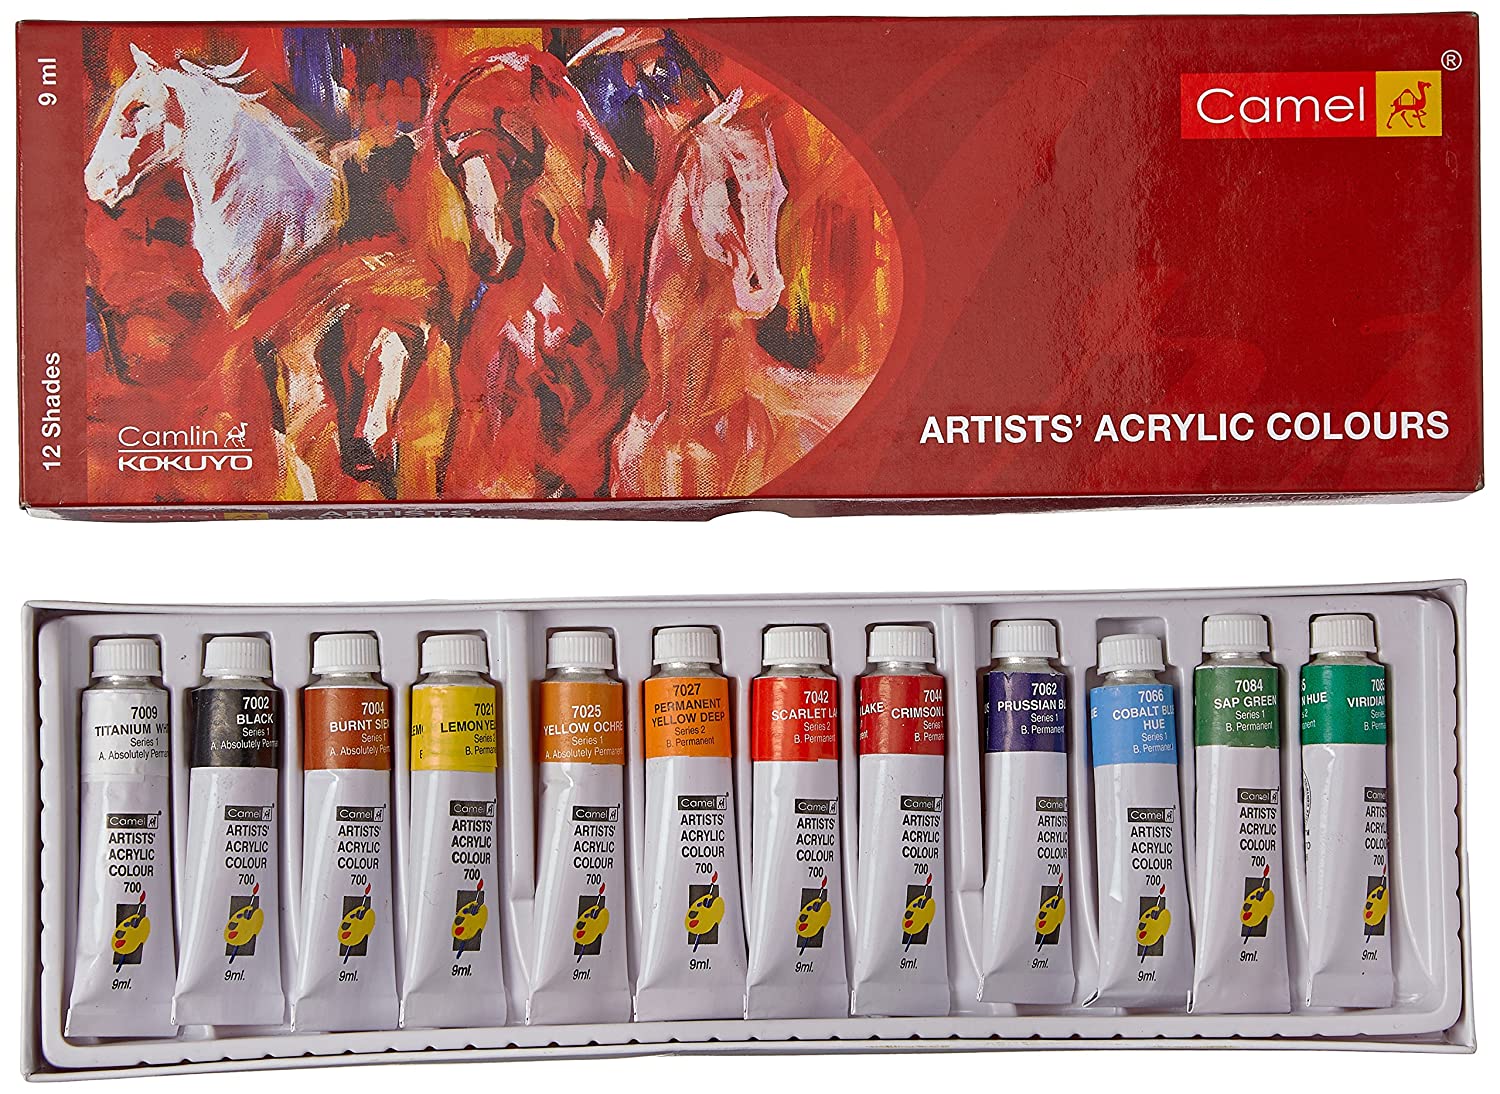 Camlin Kokuyo Acrylic Color Box - 9ml Tubes, 12 Shades